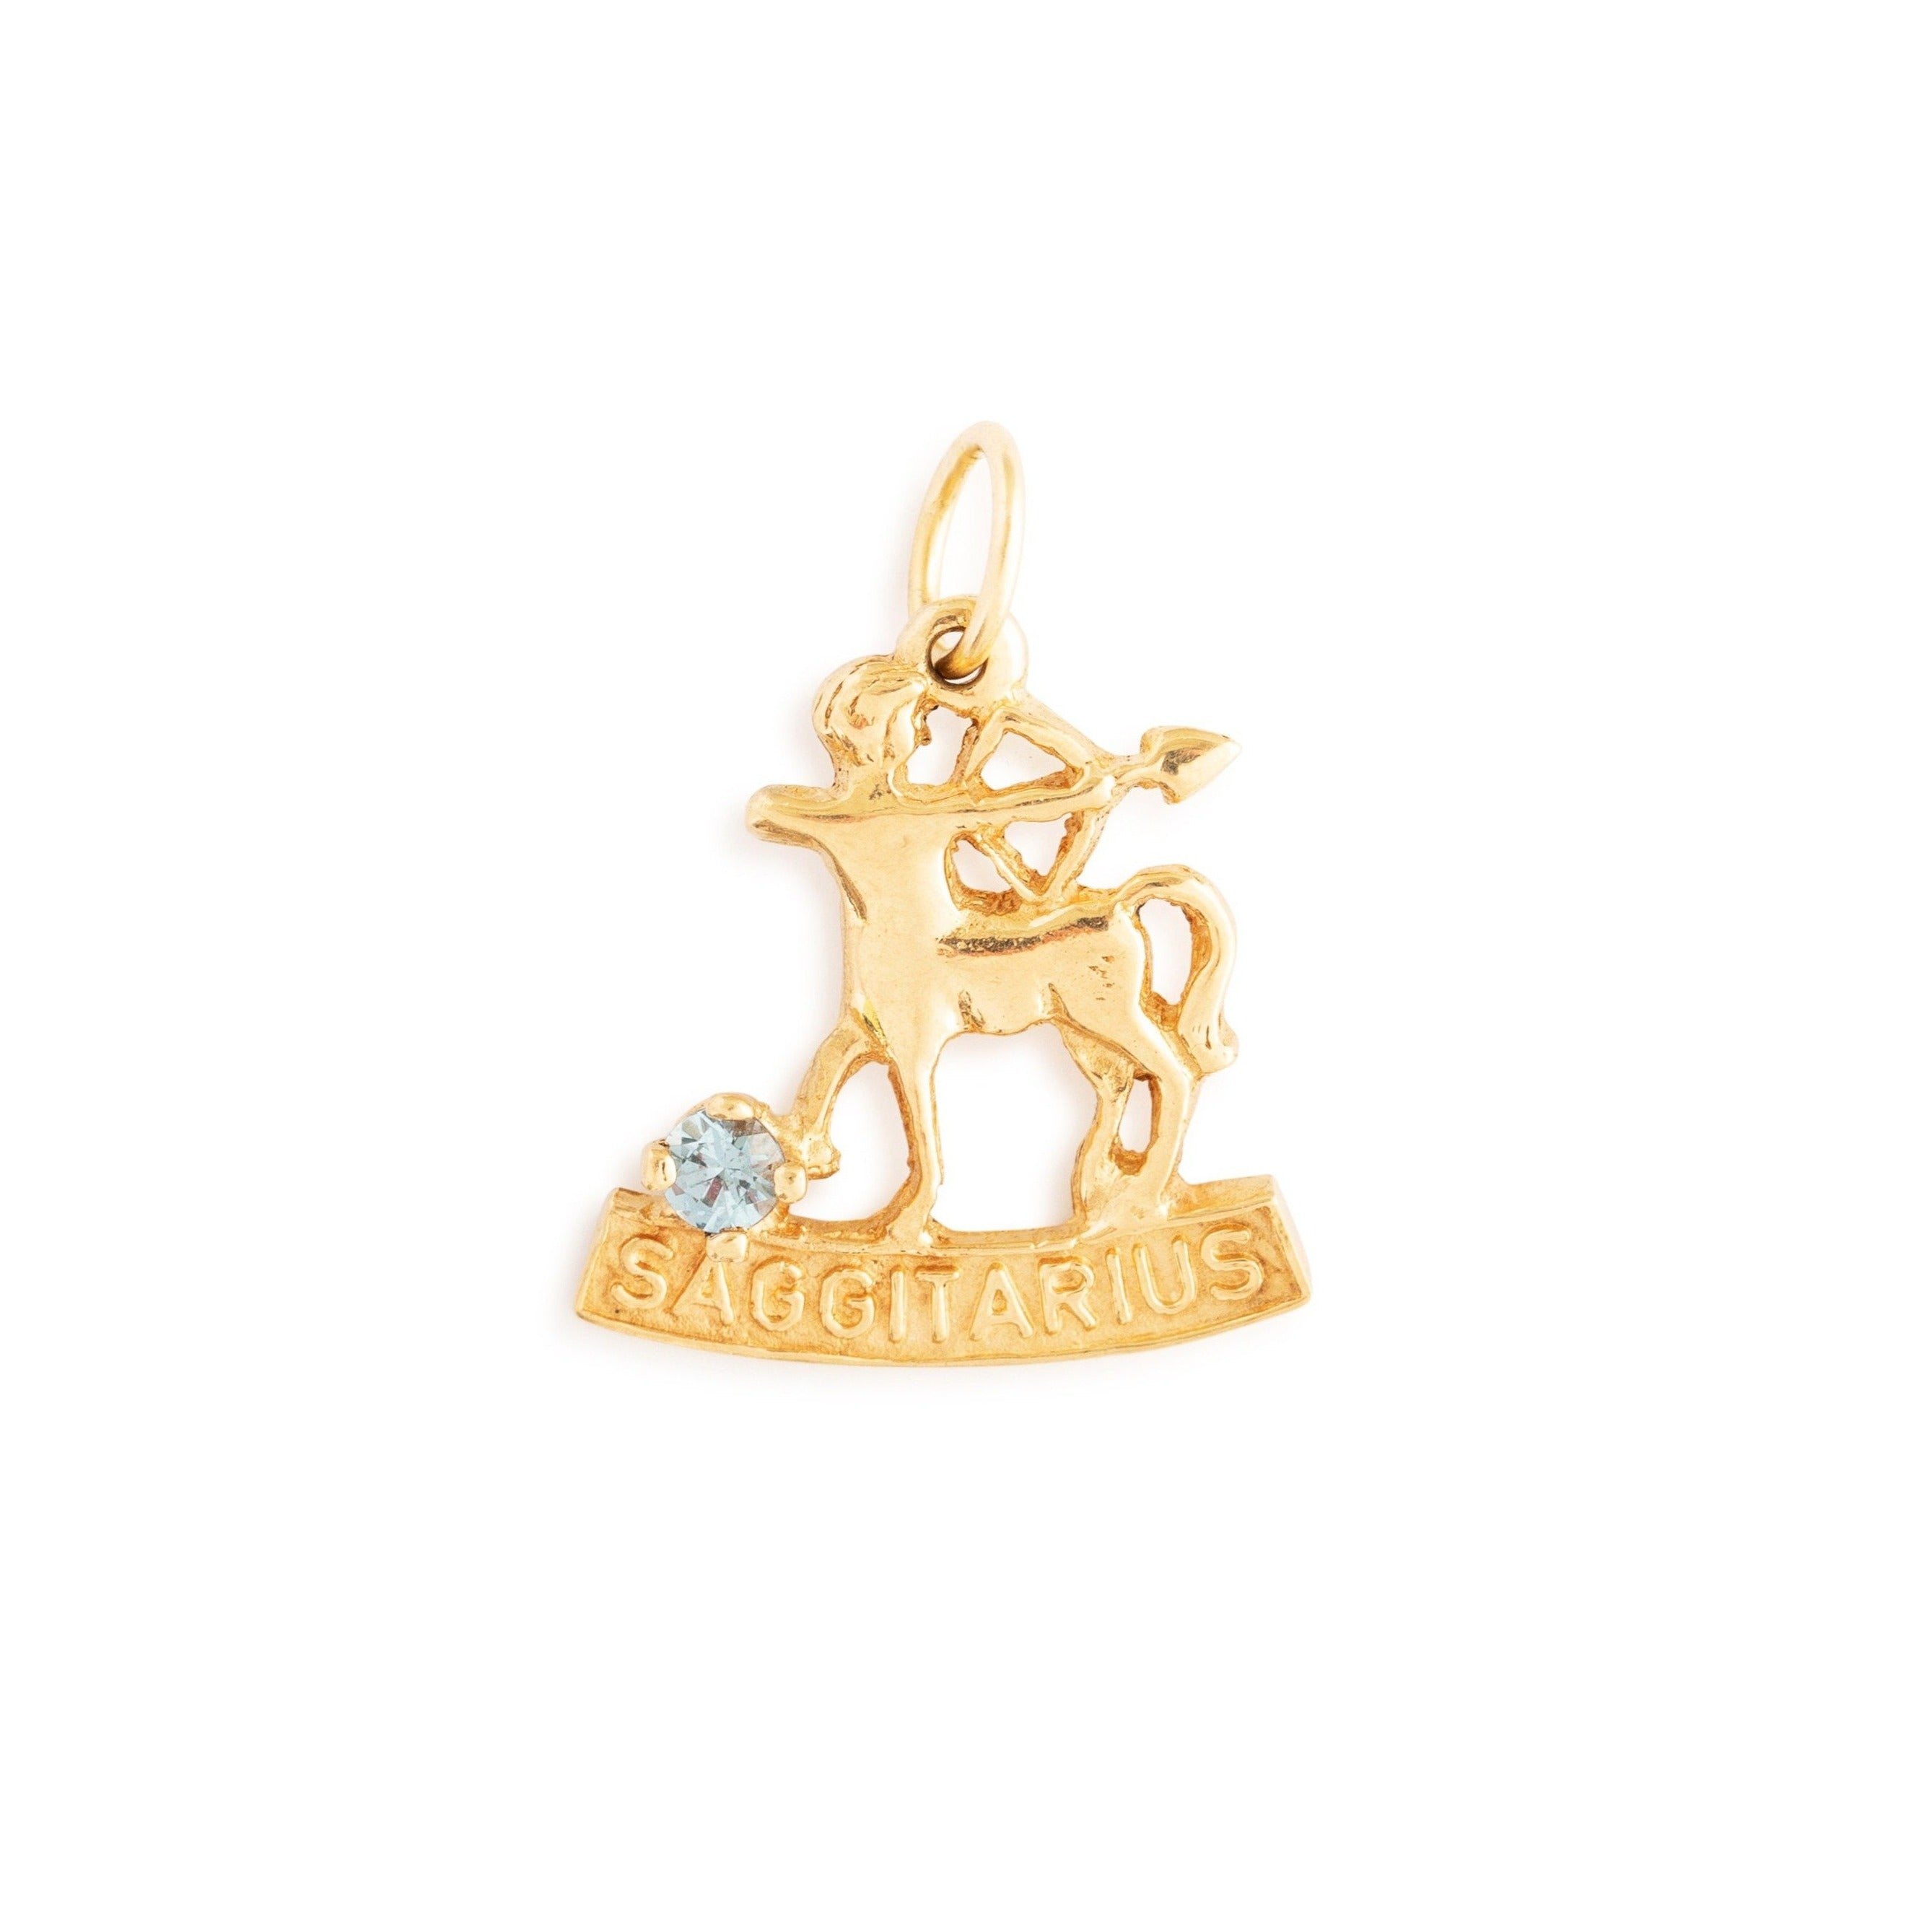 Vintage Sagittarius Figure 10k Gold and Topaz Zodiac Charm